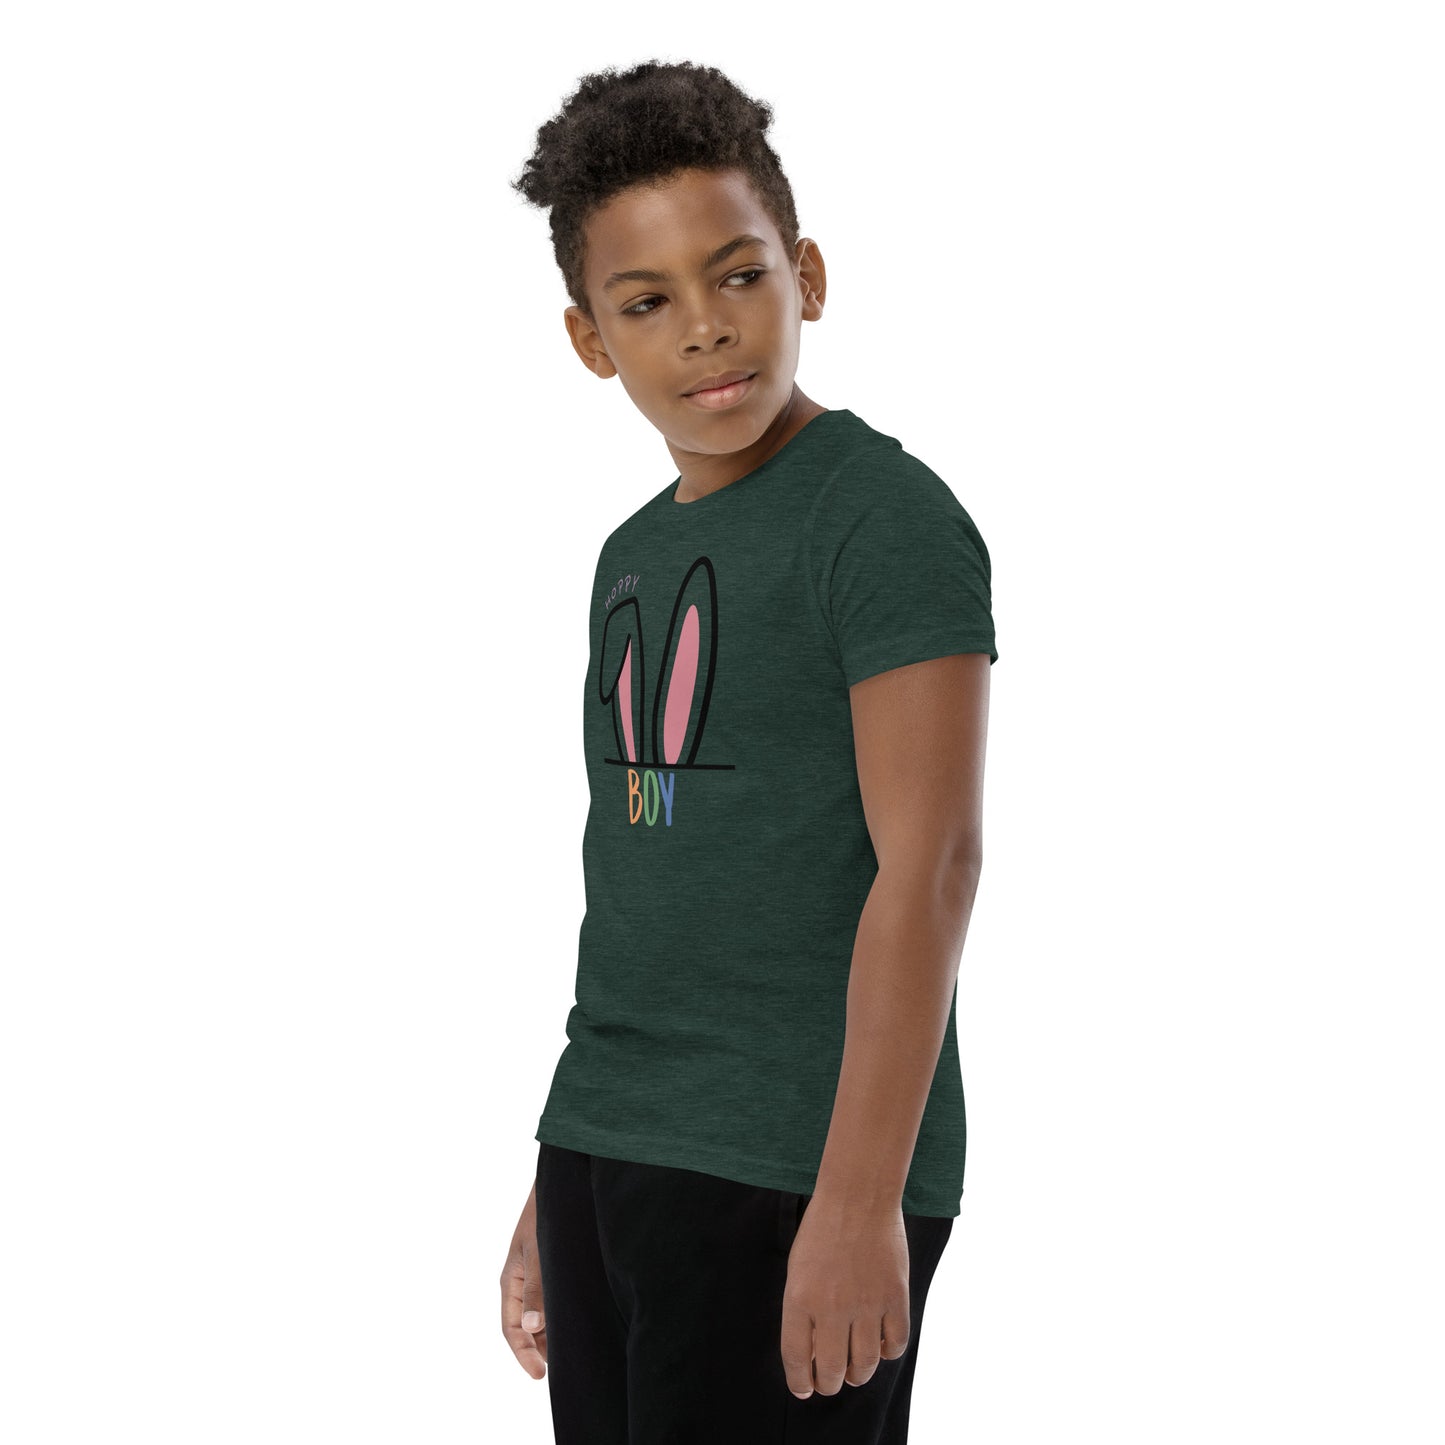 Hoppy Boy Youth T-Shirt